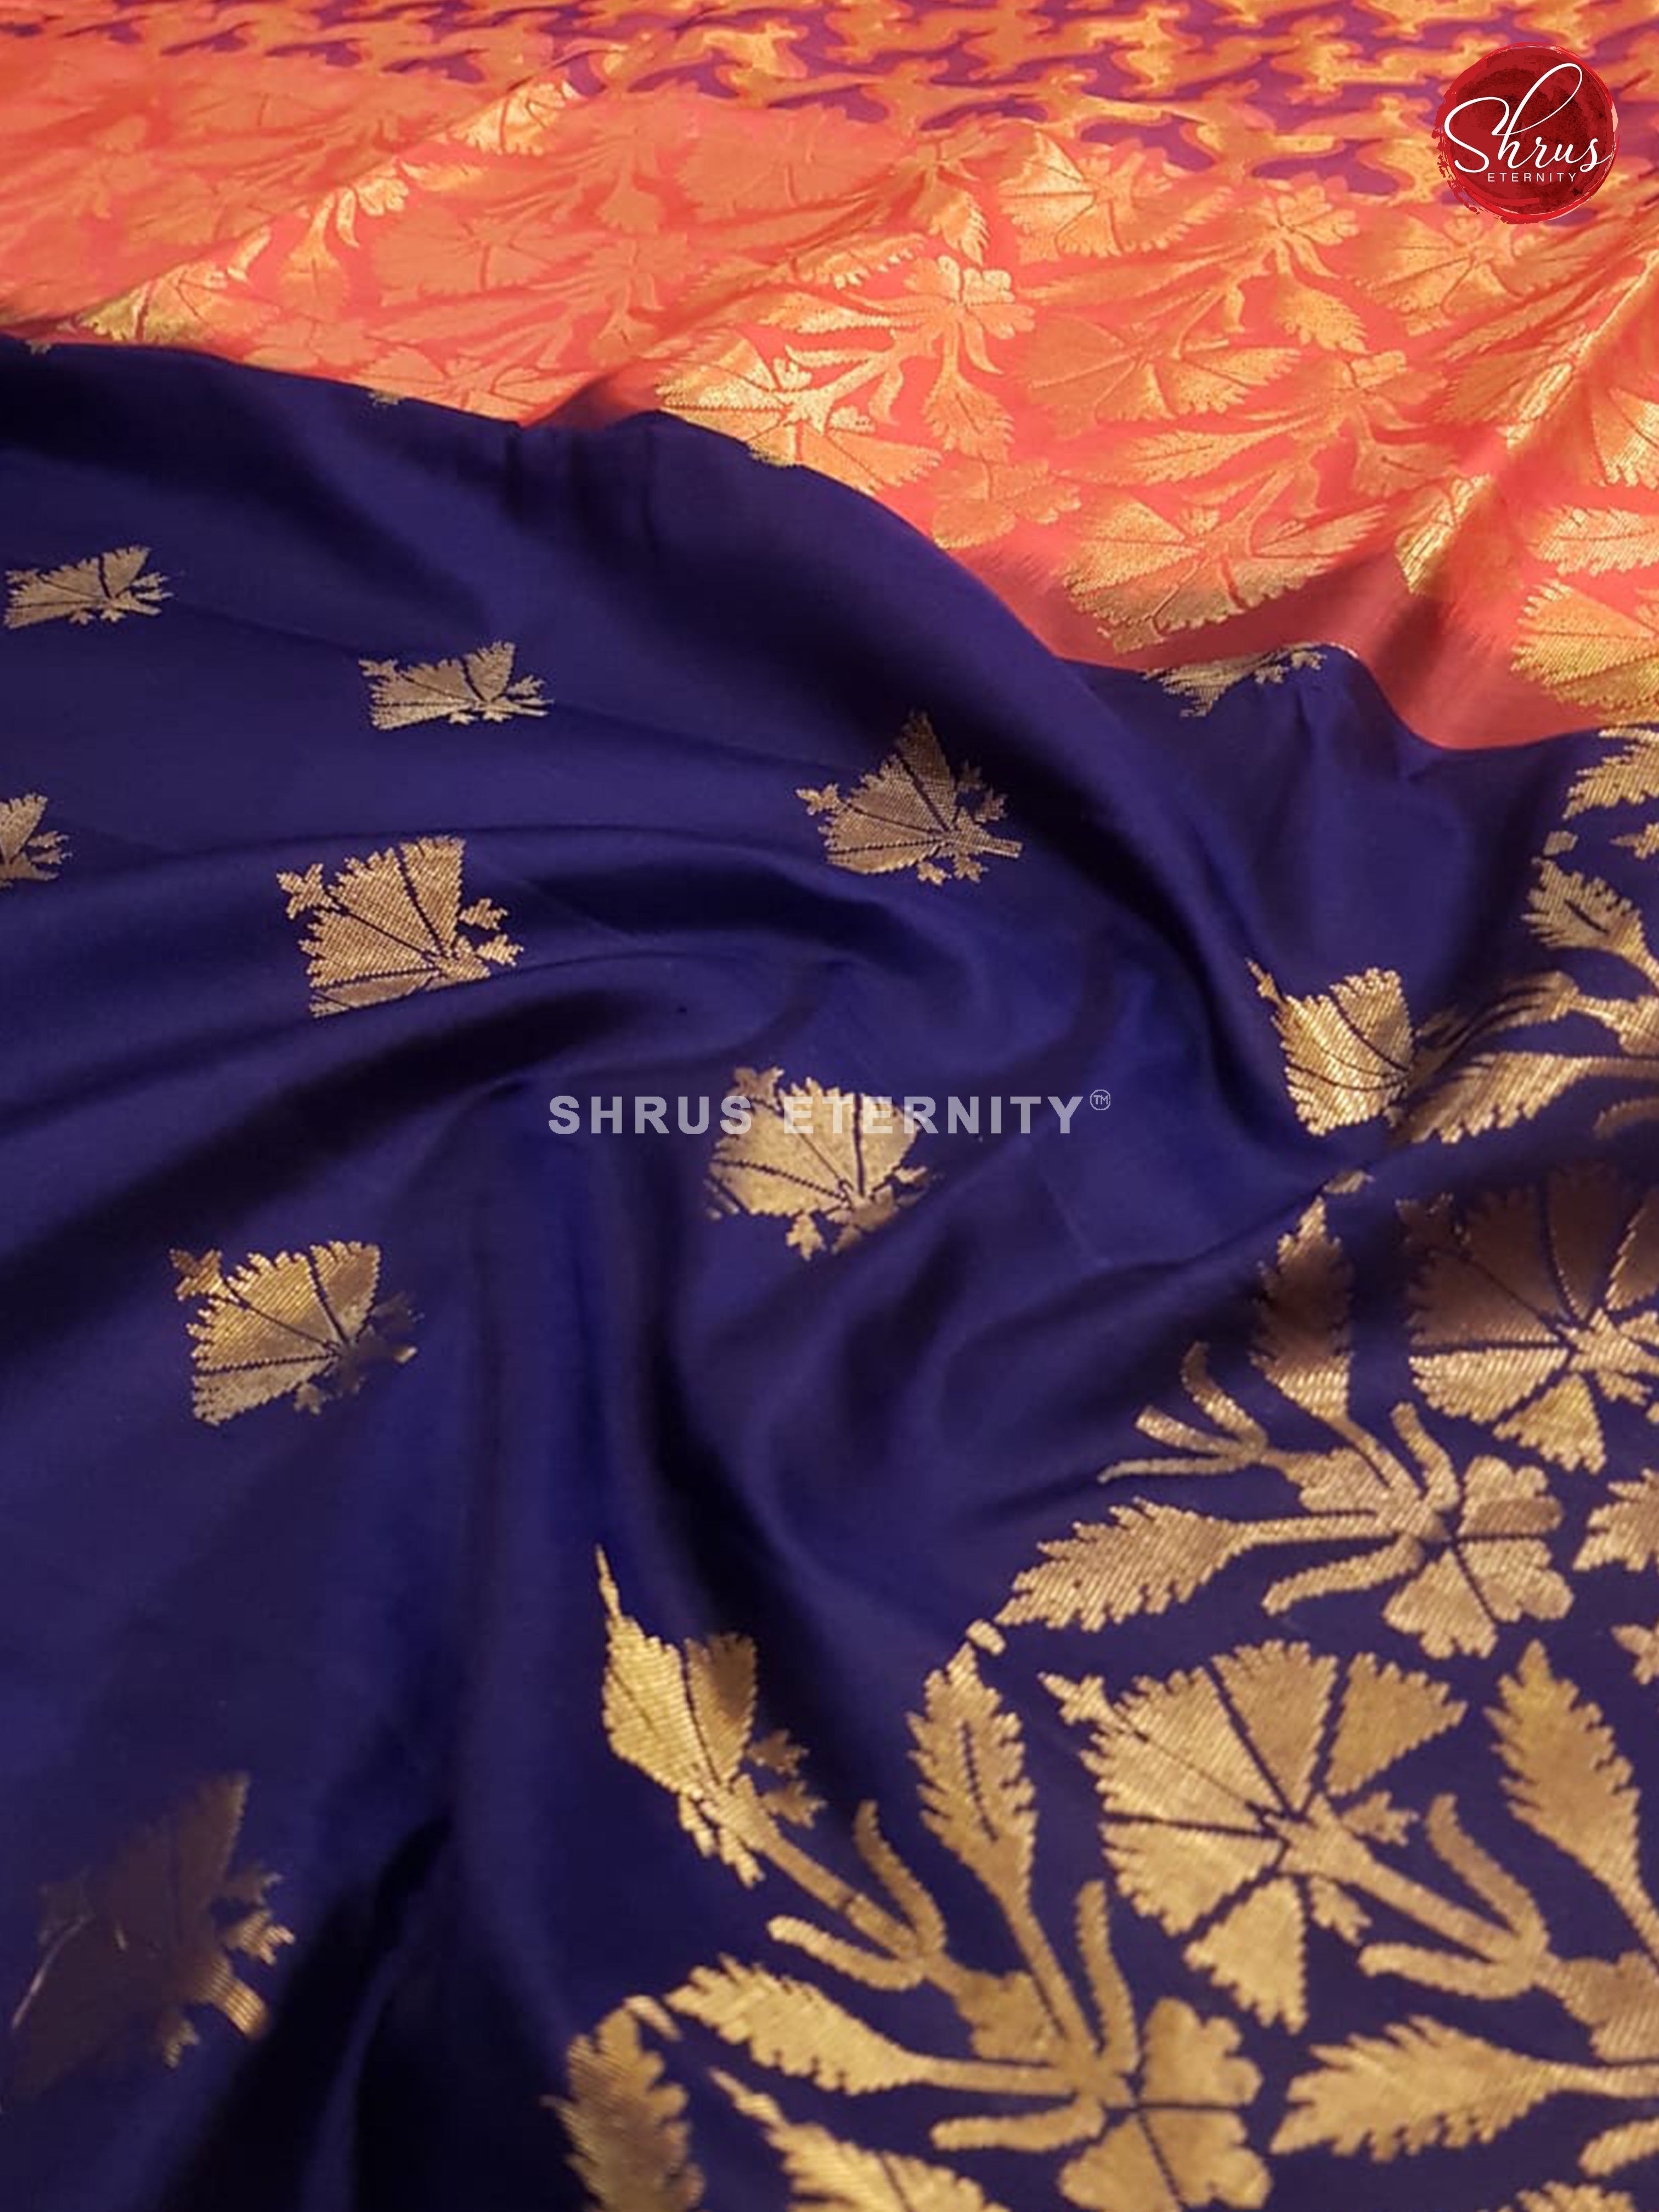 Blue & Orangish Pink  - Soft Silk - Shop on ShrusEternity.com